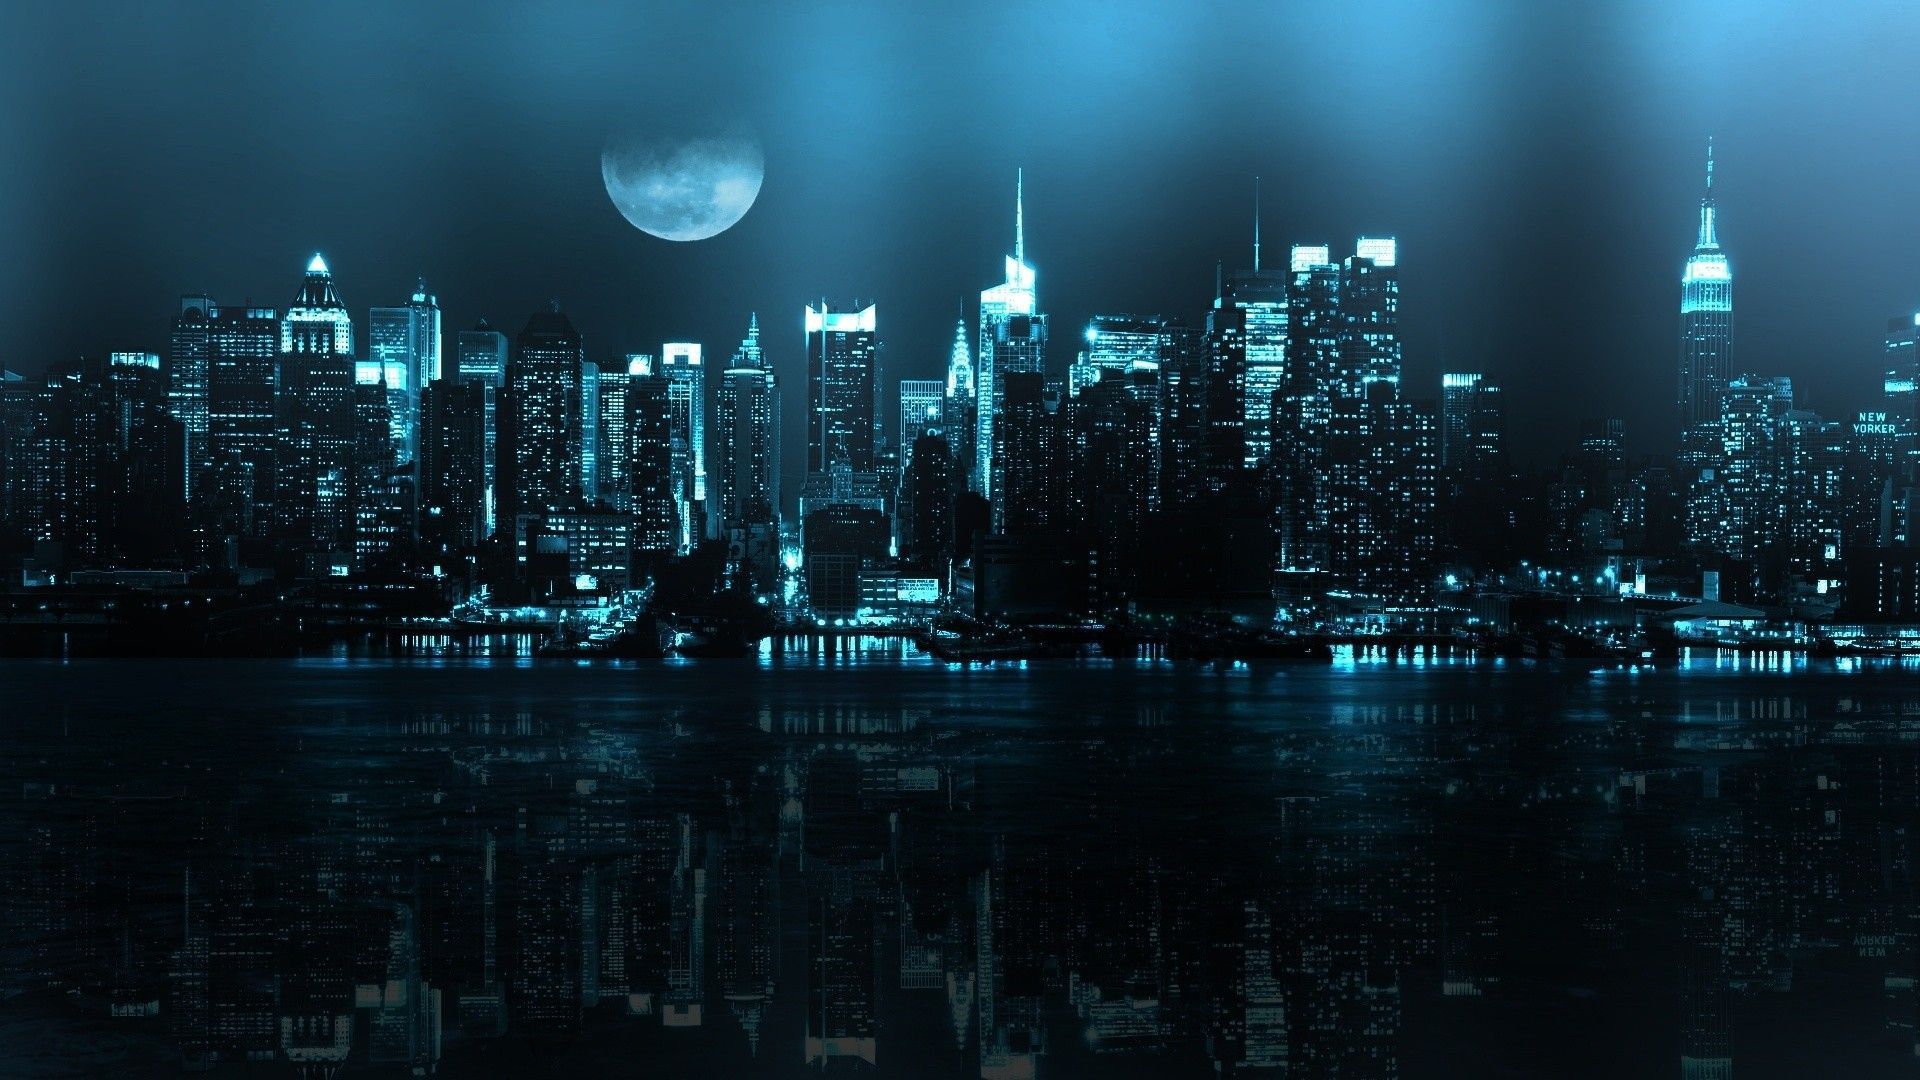 Night City Wallpaper Image Free Download. Papel de parede pc